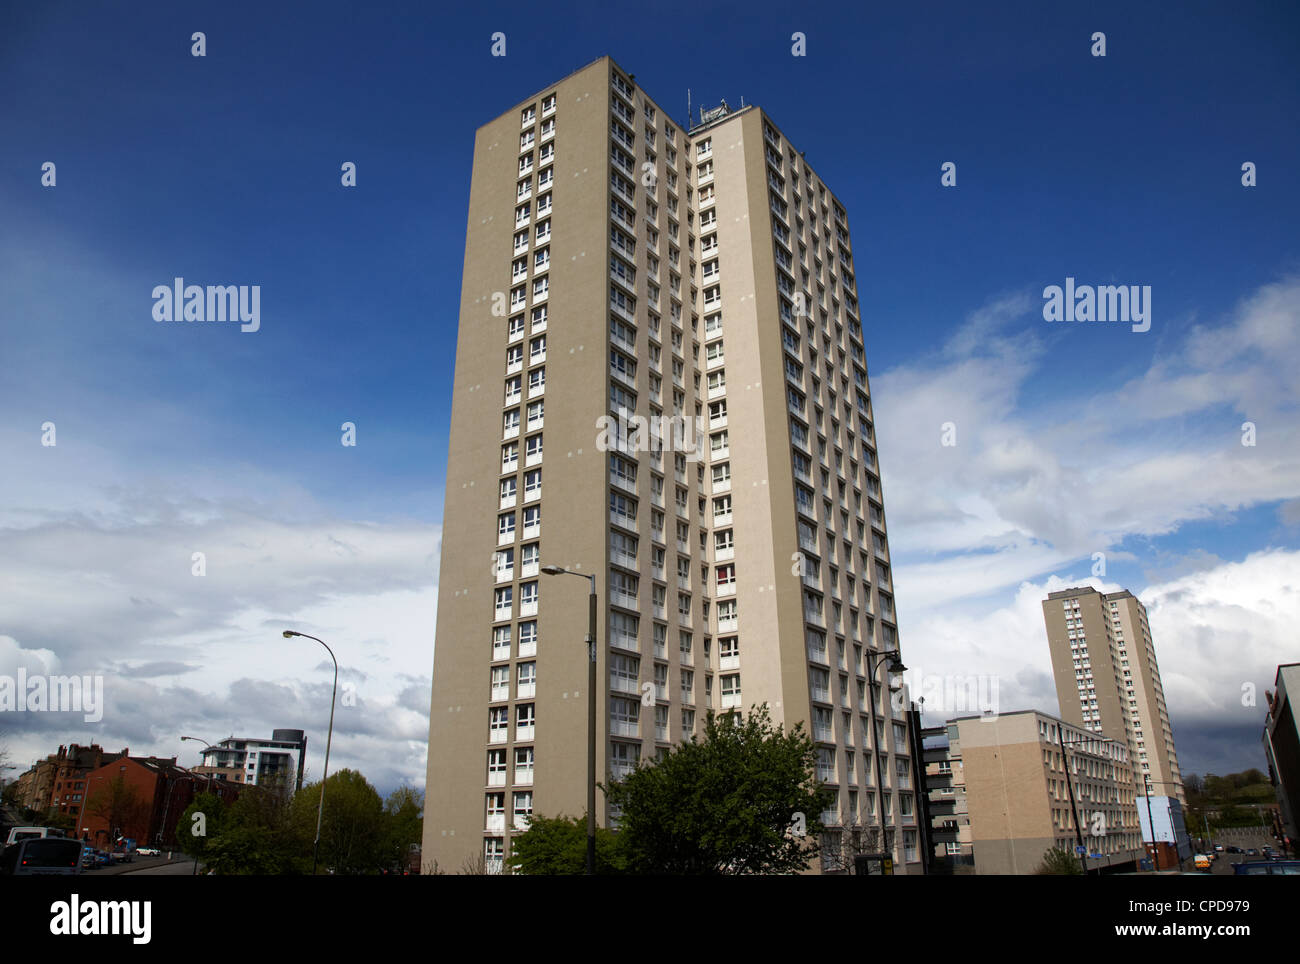 tower housing blocks apartments social housing in cowcaddens ...